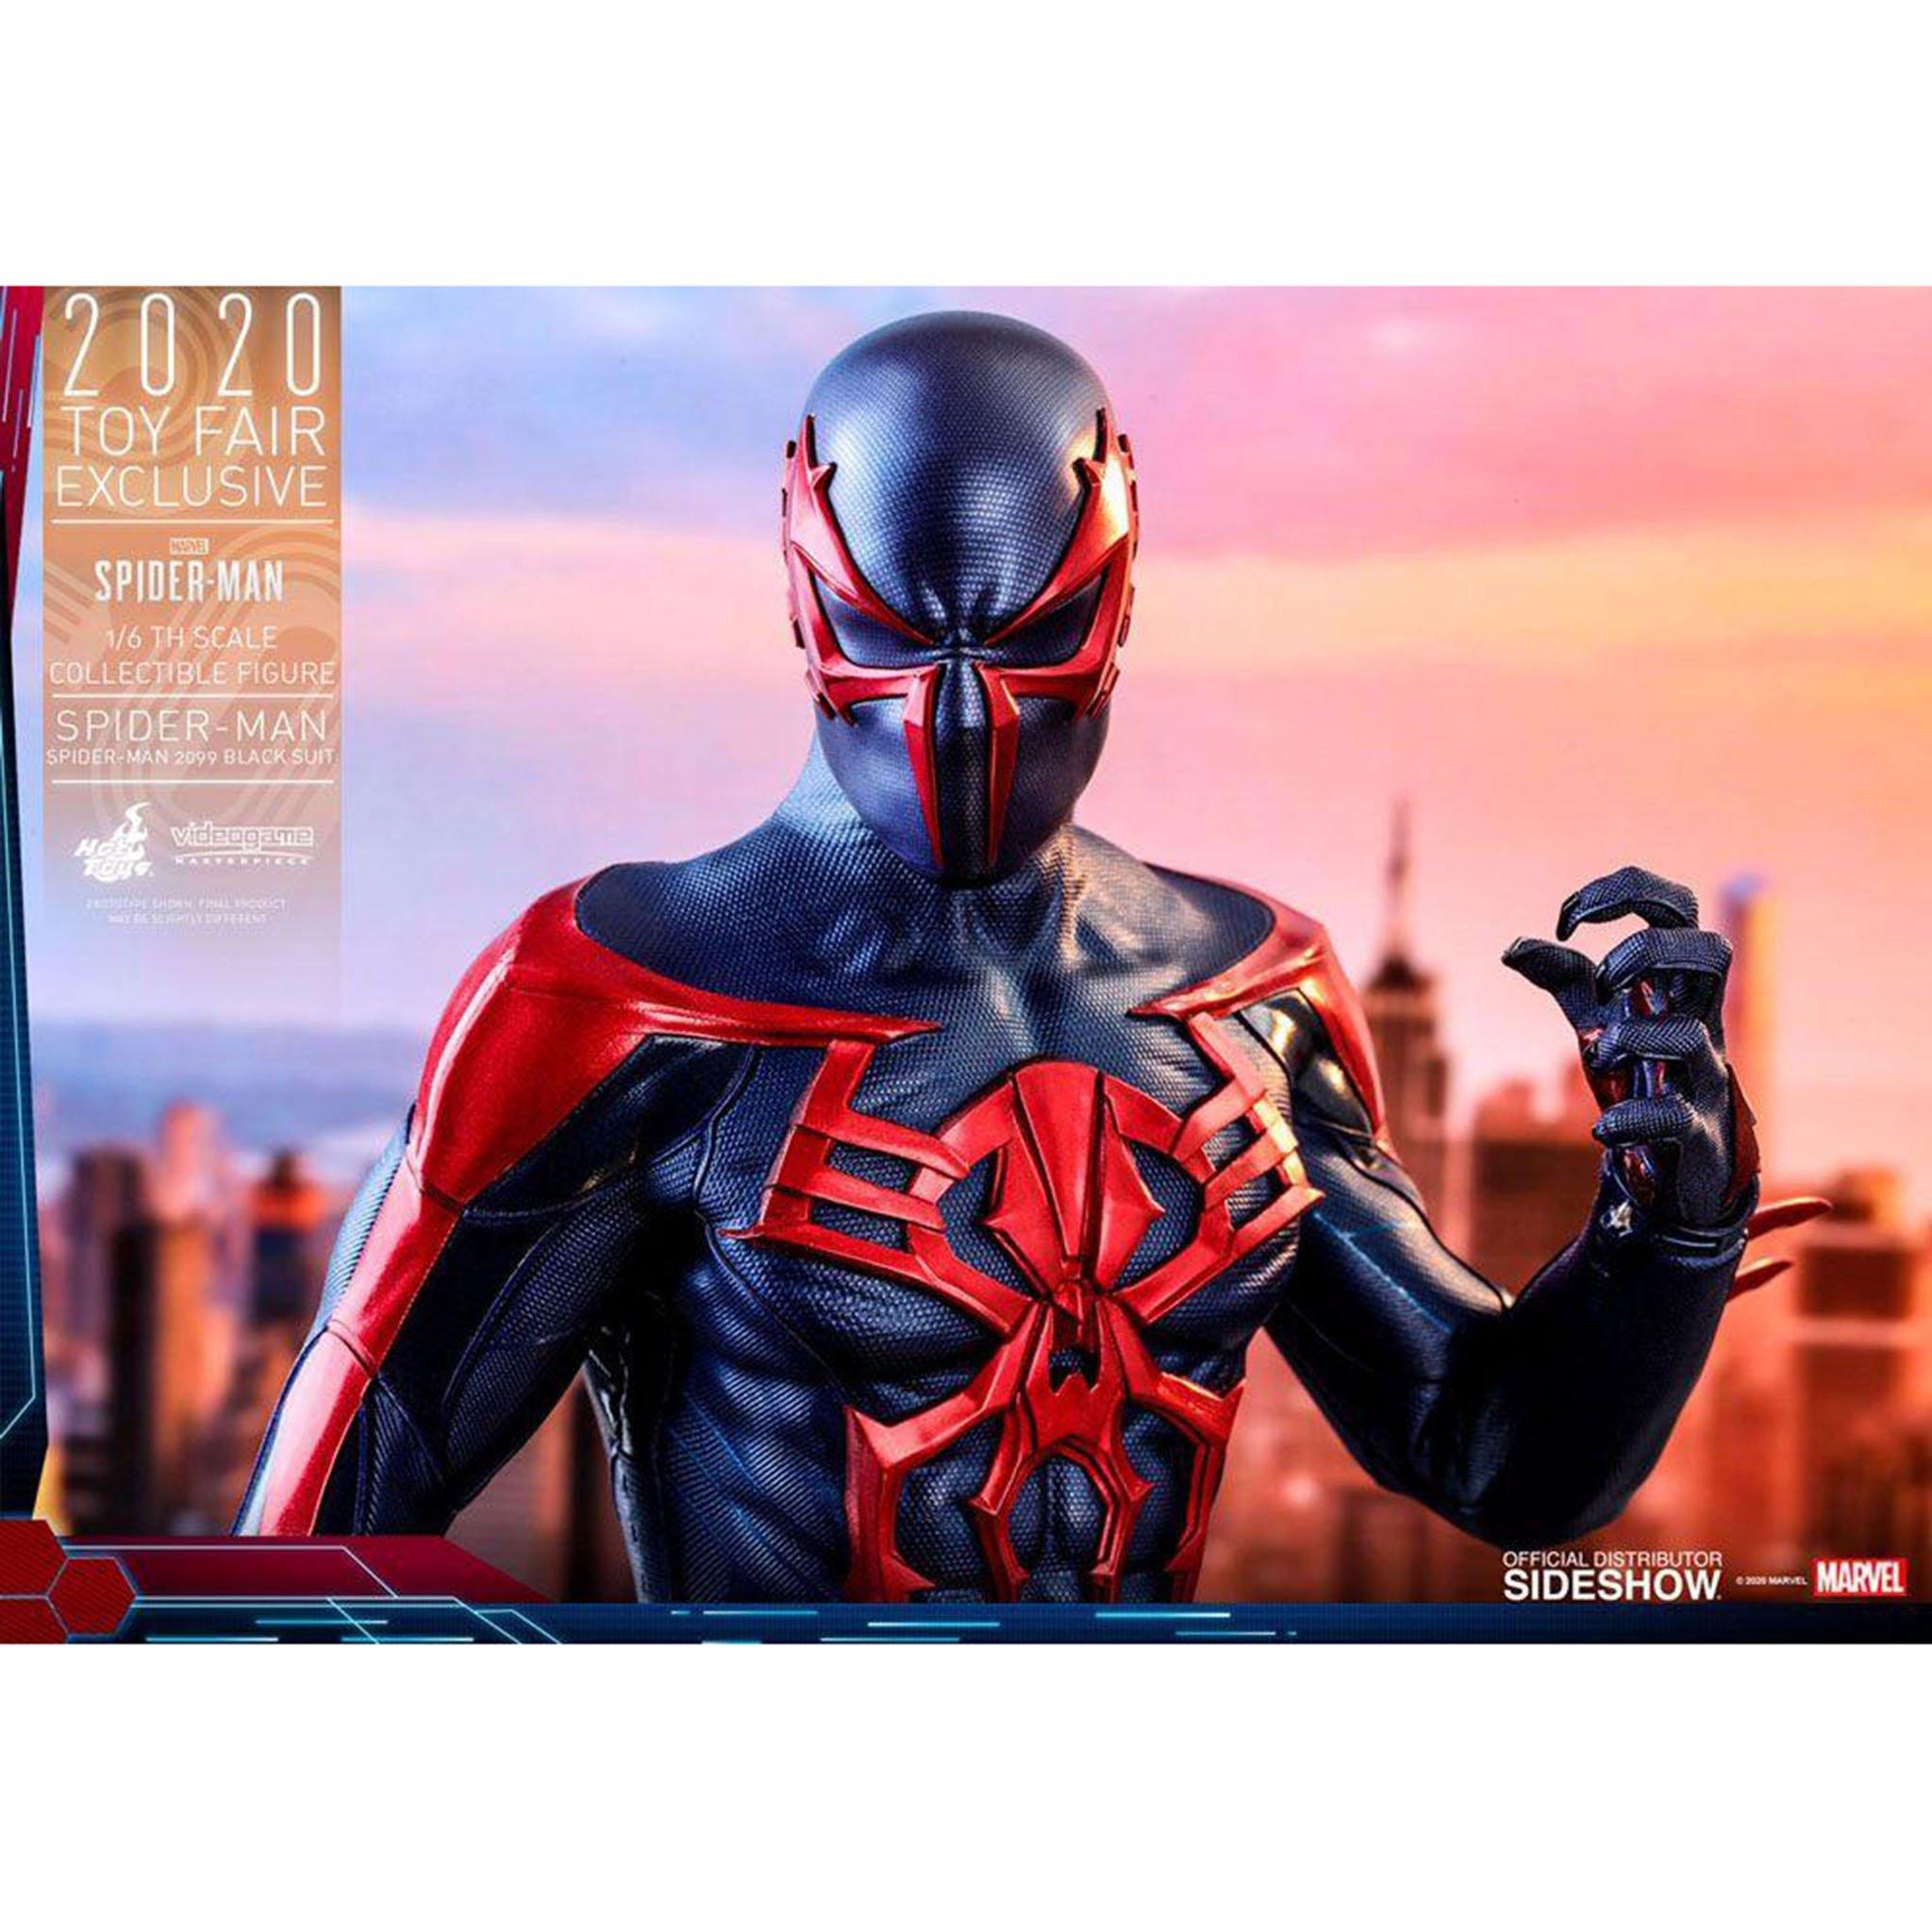 Hot Toys Marvel's Spider-Man Video Game Masterpiece Spider-Man 2099 Black Suit Exclusive Figure - NEXTLEVELUK